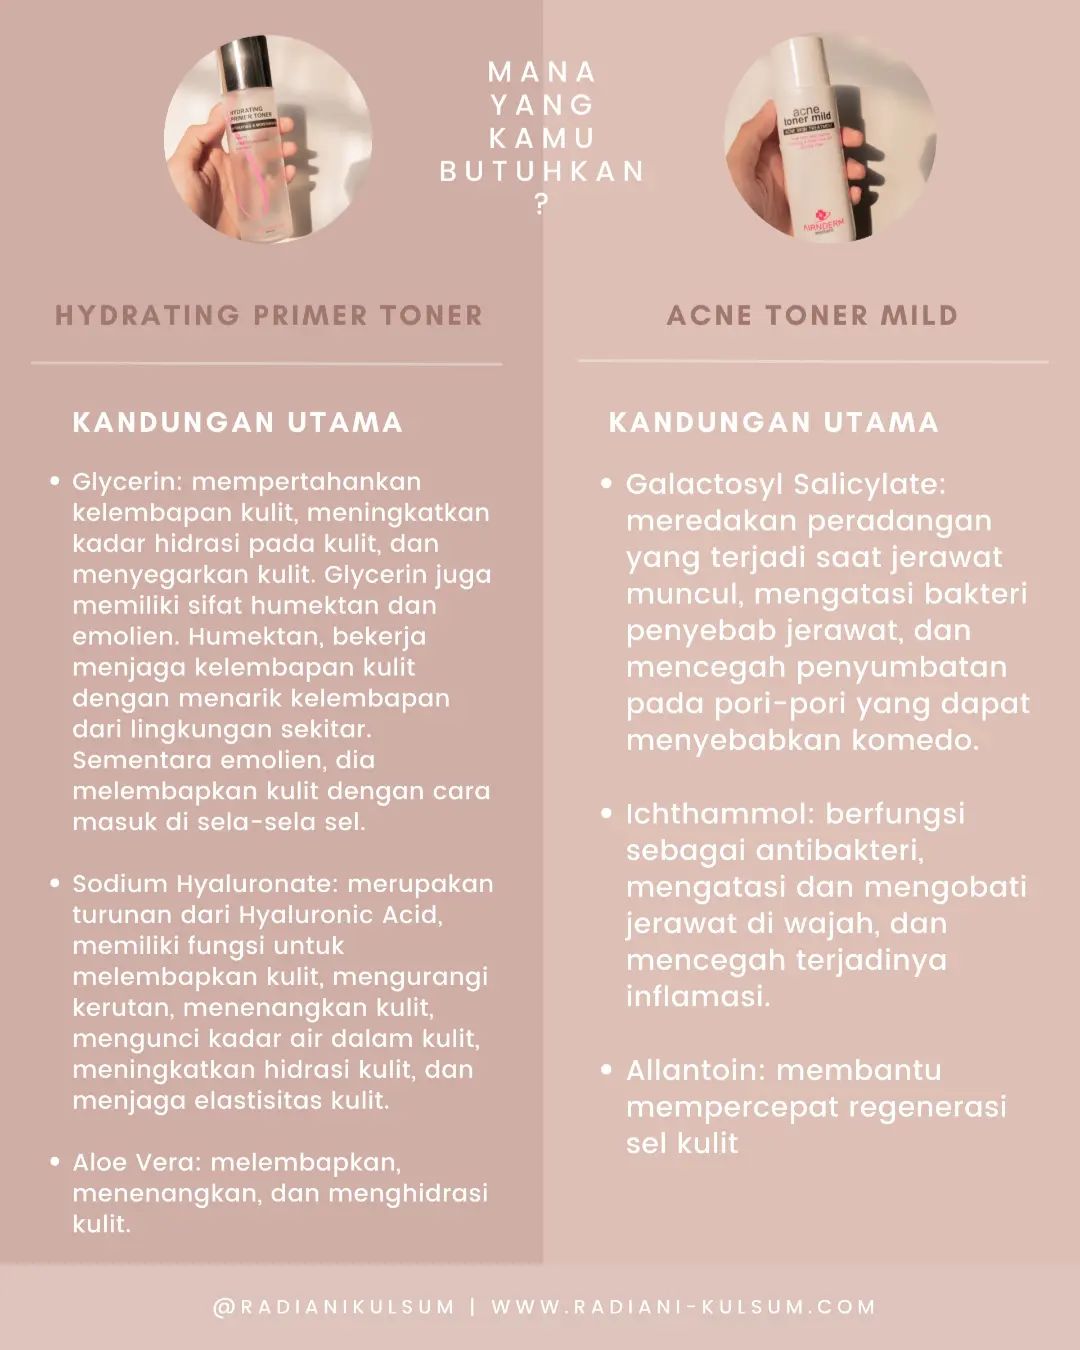 Airinderm Hydrating Primer Toner vs Acne Toner Mild